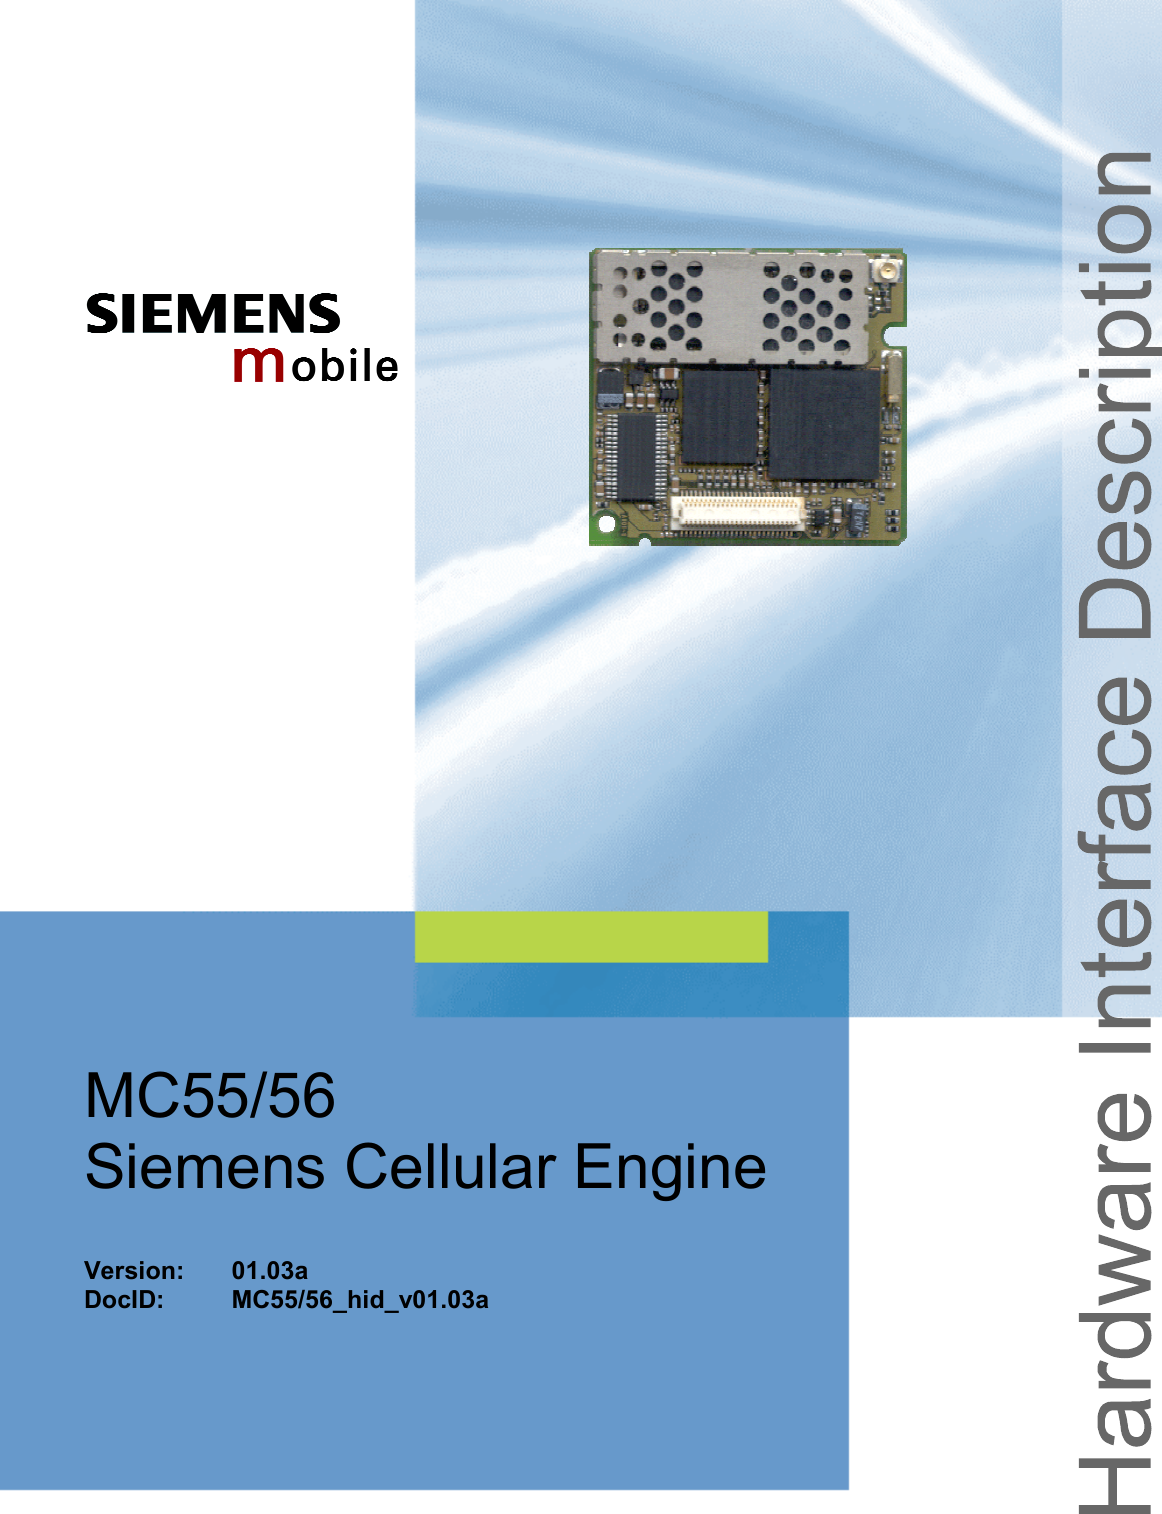 MC55/56 Hardware Interface Description Confidential / Released s mo b i l e MC55/56_hid_v01.03a  Page 1 of 101  23.01.2004  MC55/56 Siemens Cellular Engine   Version: 01.03a DocID: MC55/56_hid_v01.03a 